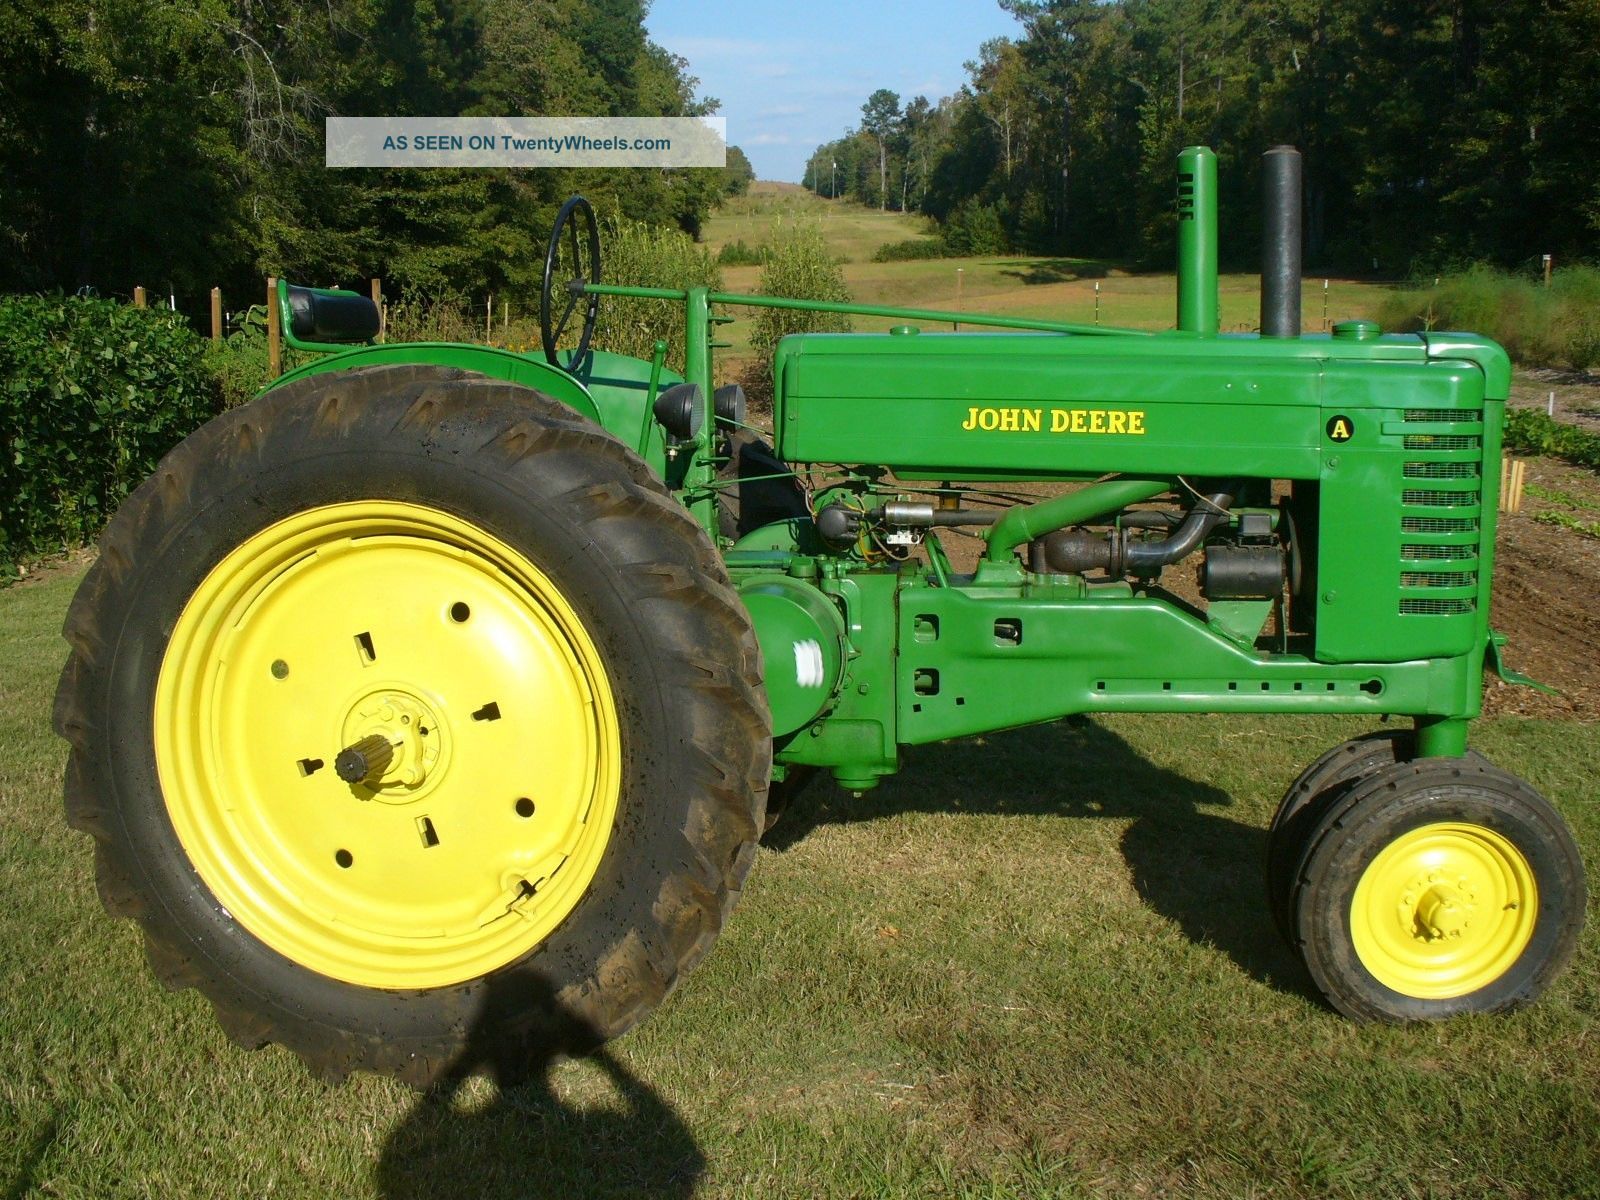 vintage john deere tractors - Video Search Engine at ...